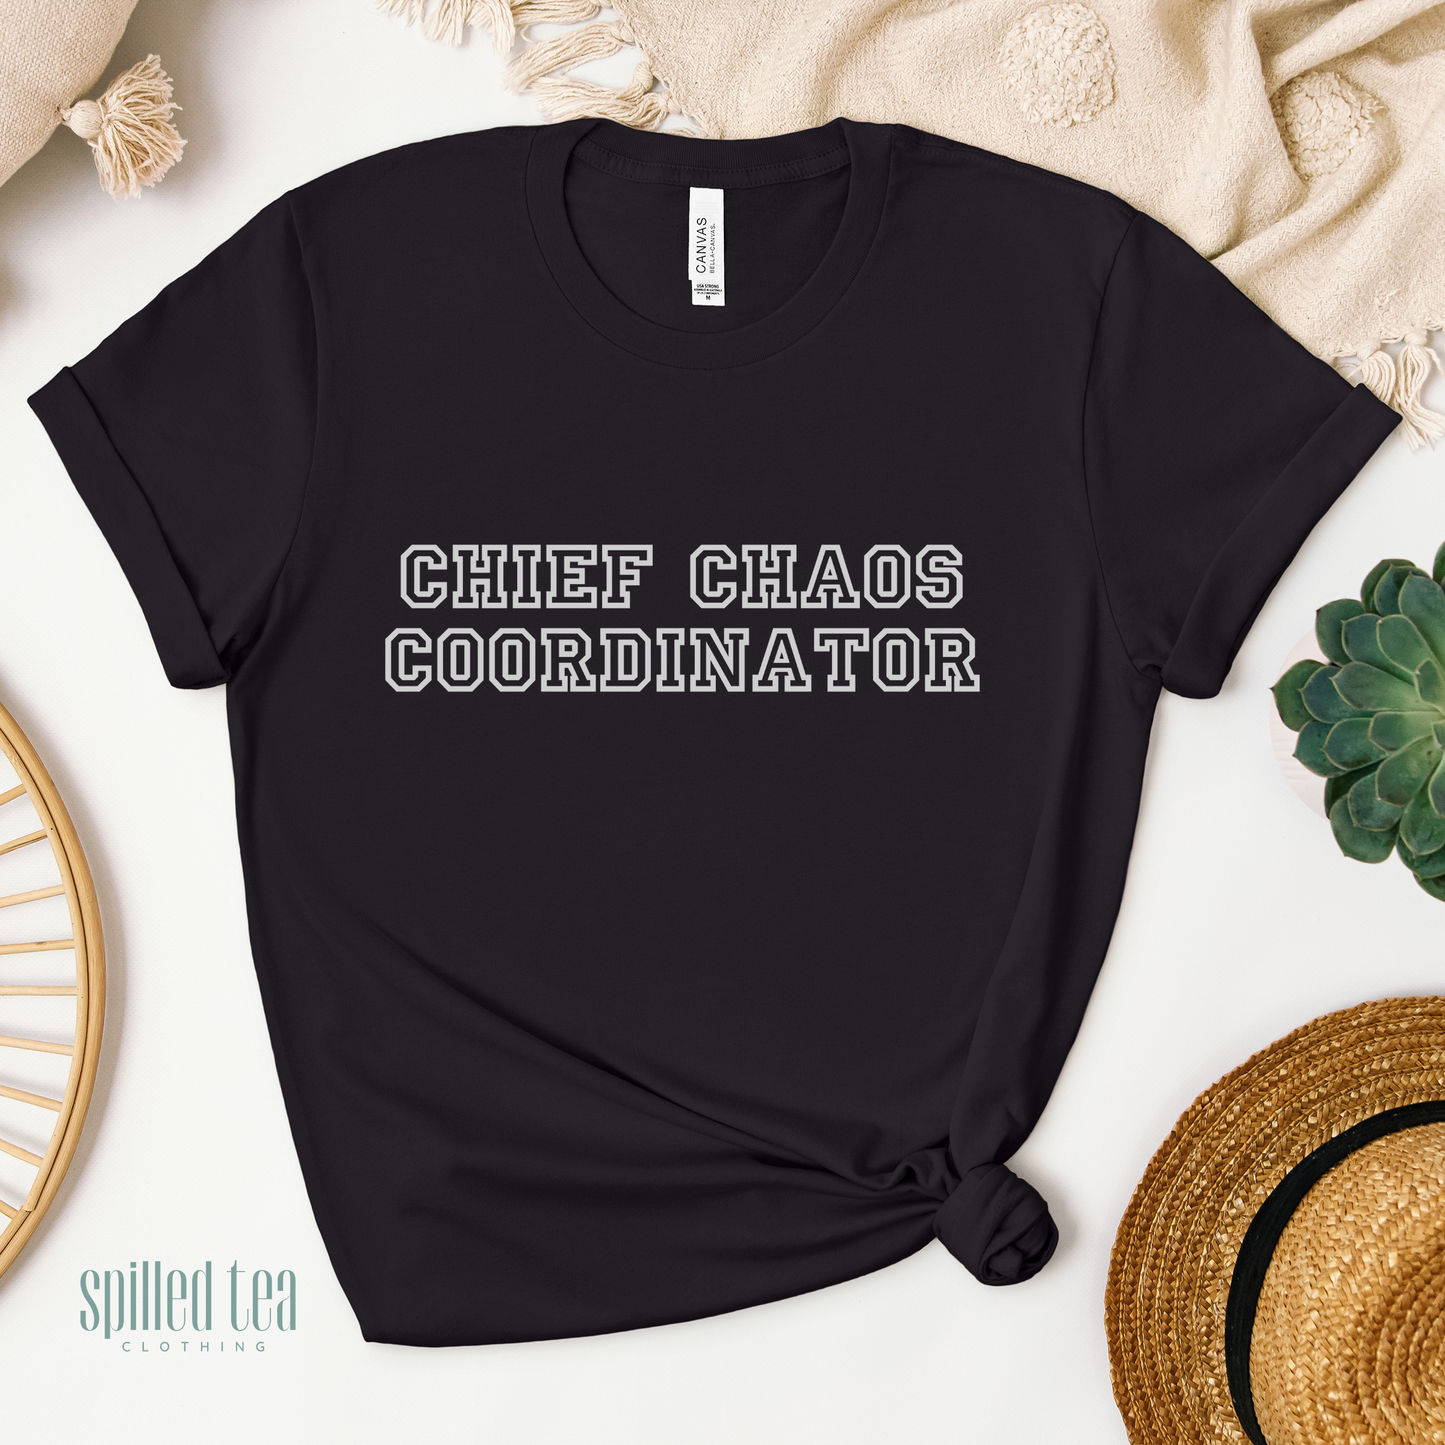 Chief Chaos Coordinator T-Shirt